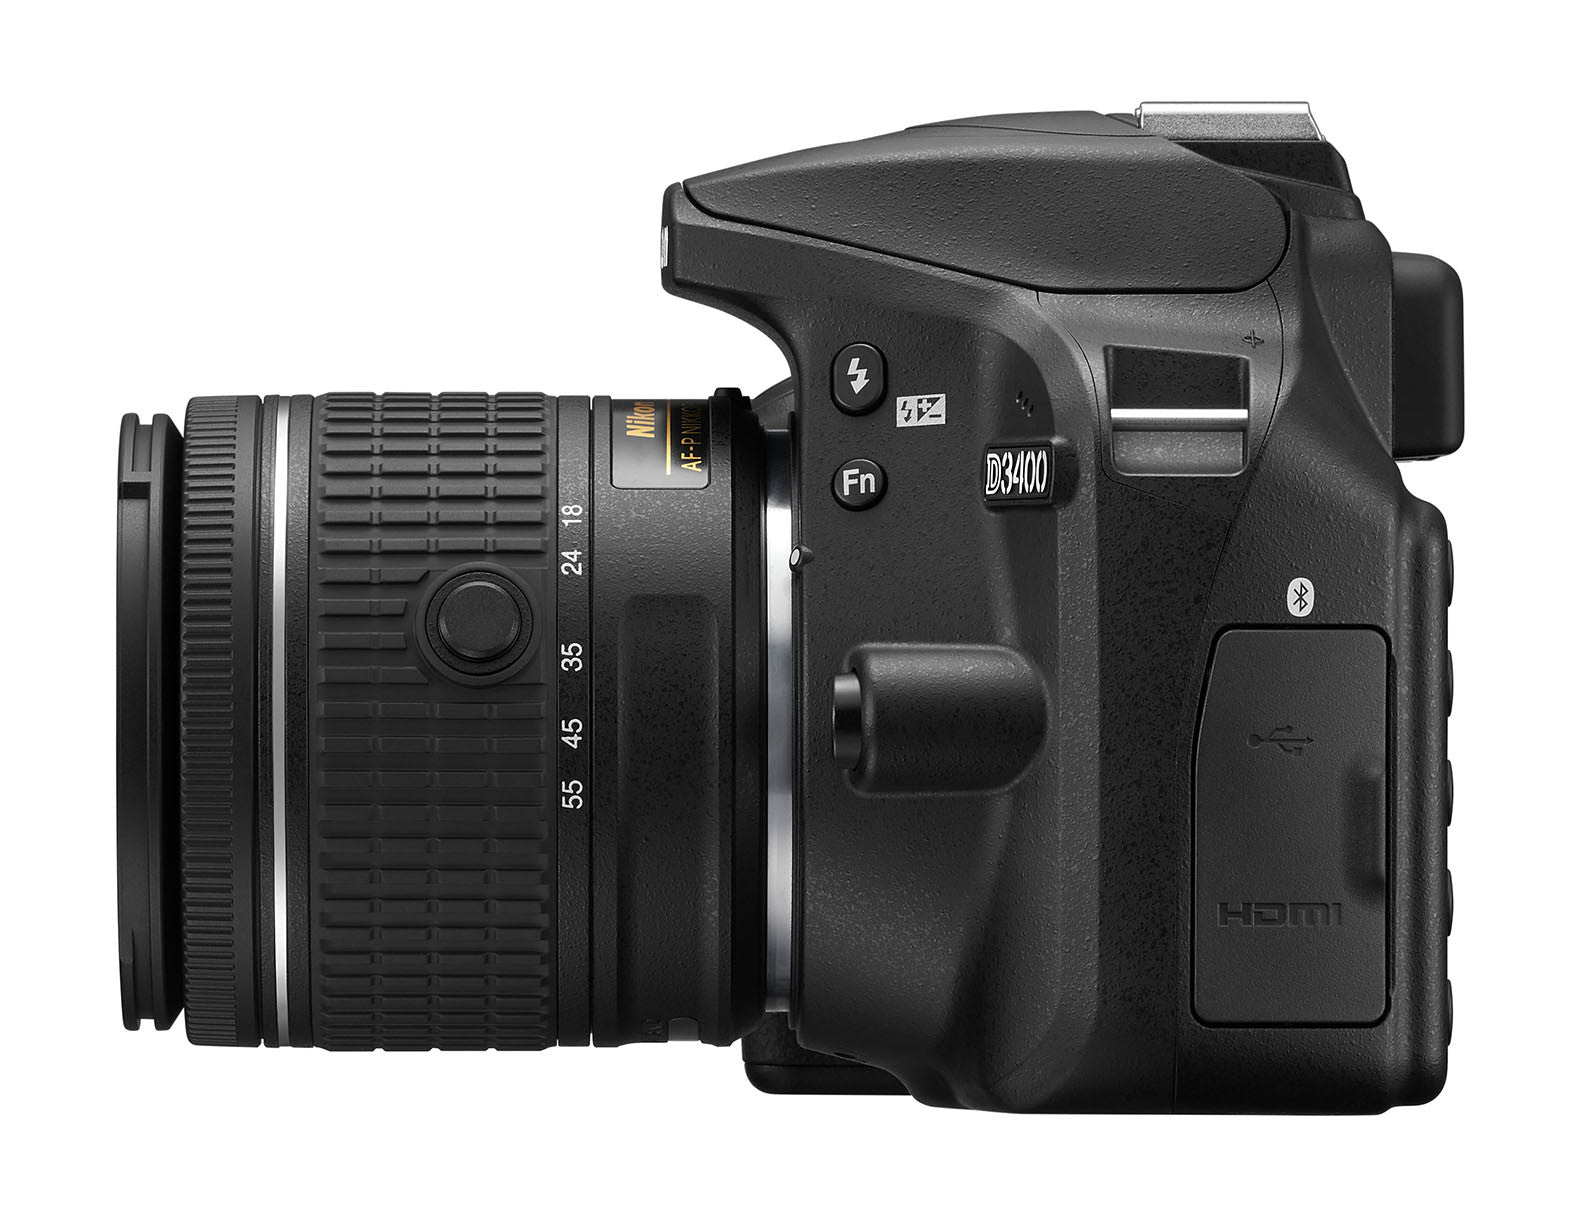 Nikon D3400 Digital SLR Camera 2 Lens Kit (18-55mm 70-300mm), camera dslr cameras, Nikon - Pictureline  - 6